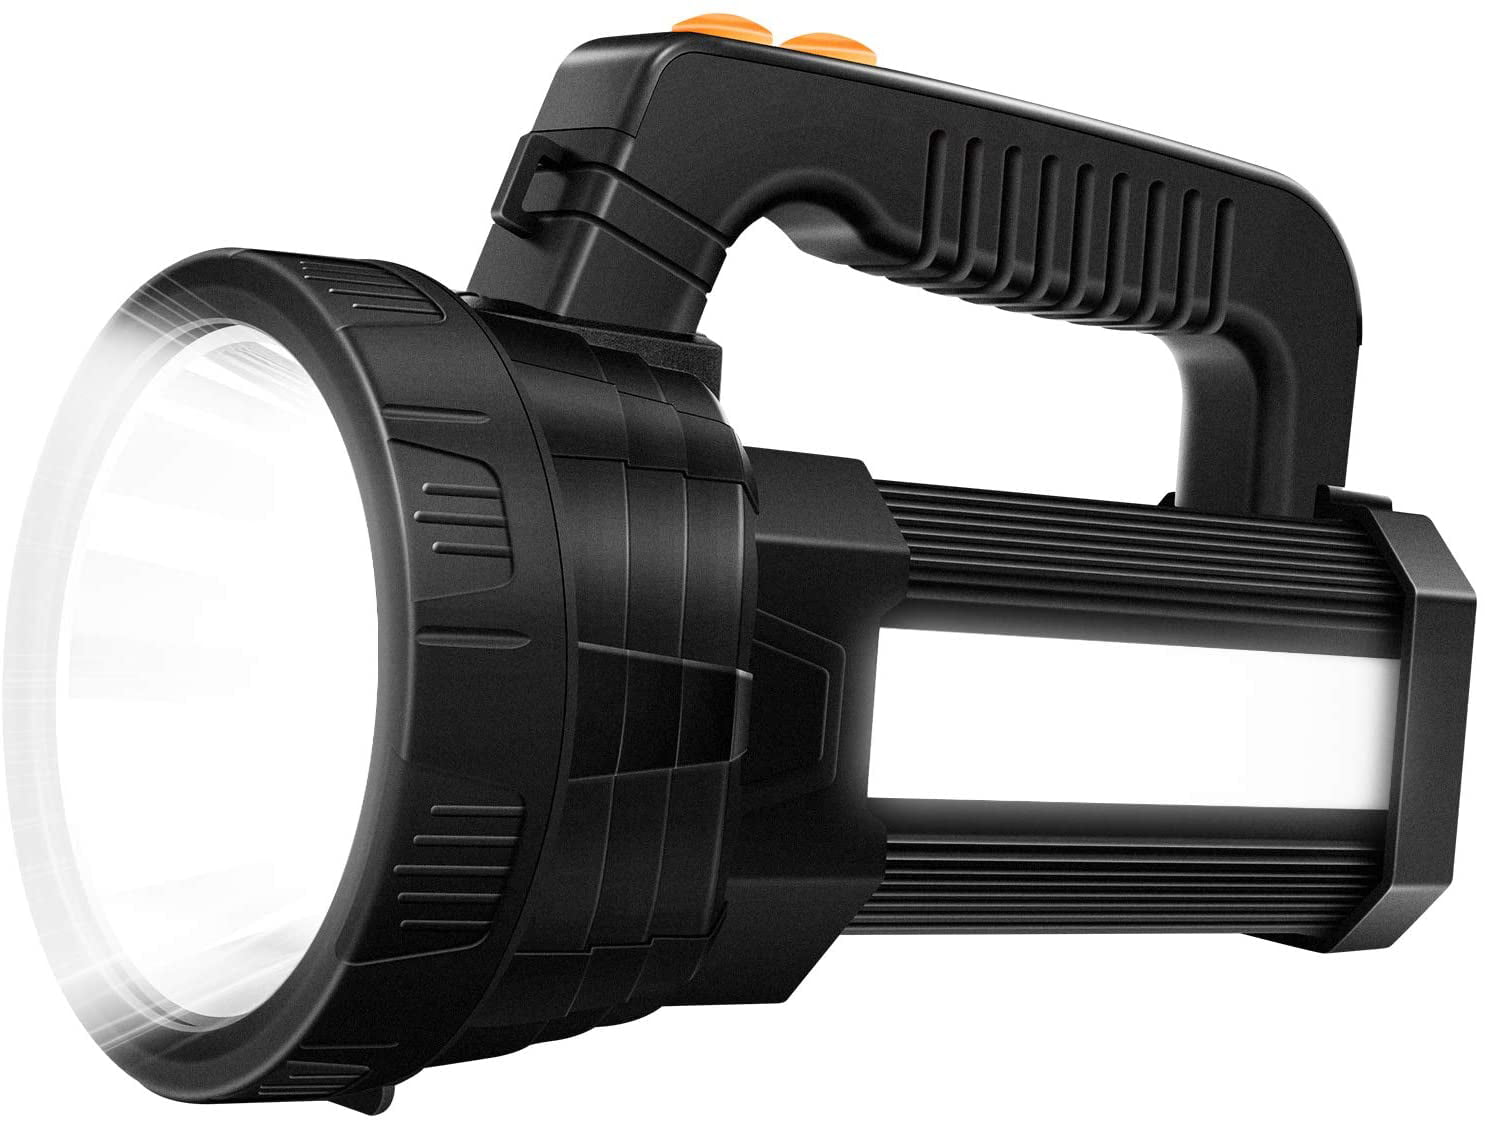 Super Bright Led Handheld Spotlight, What Is The Brightest Led Spotlight Bulb